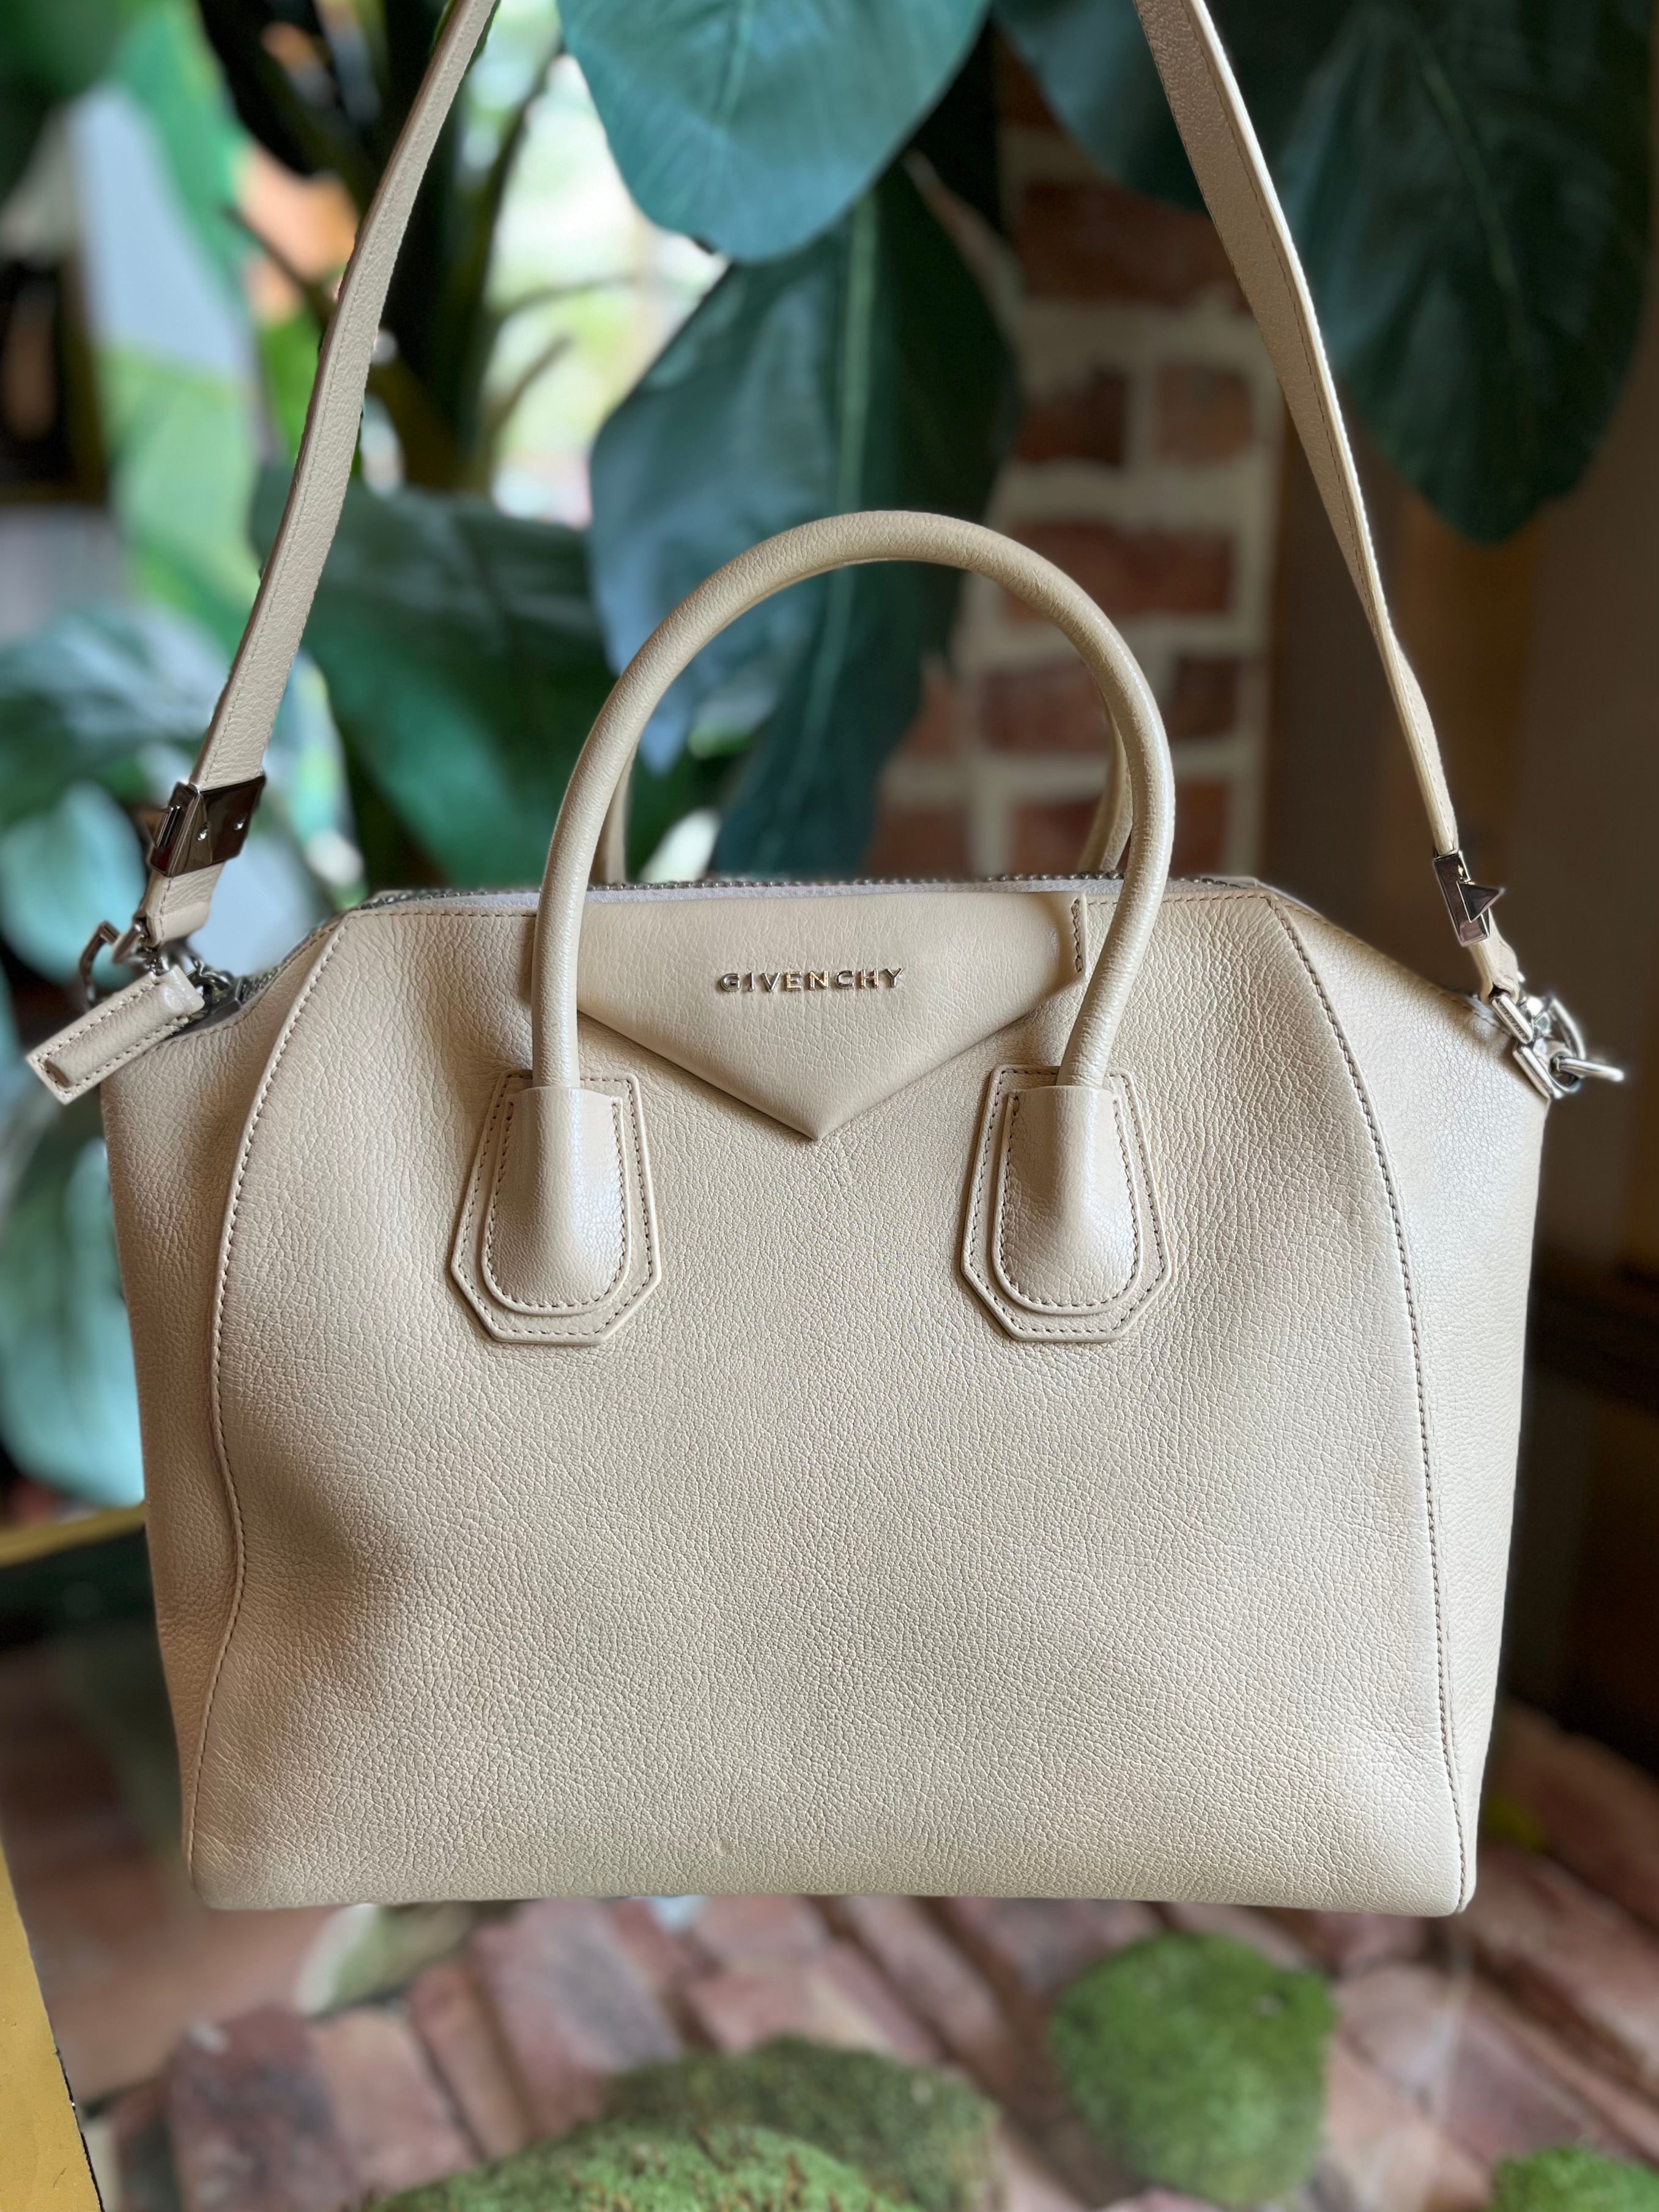 Louis Vuitton - Easy Pouch On Strap Handbag - Nude